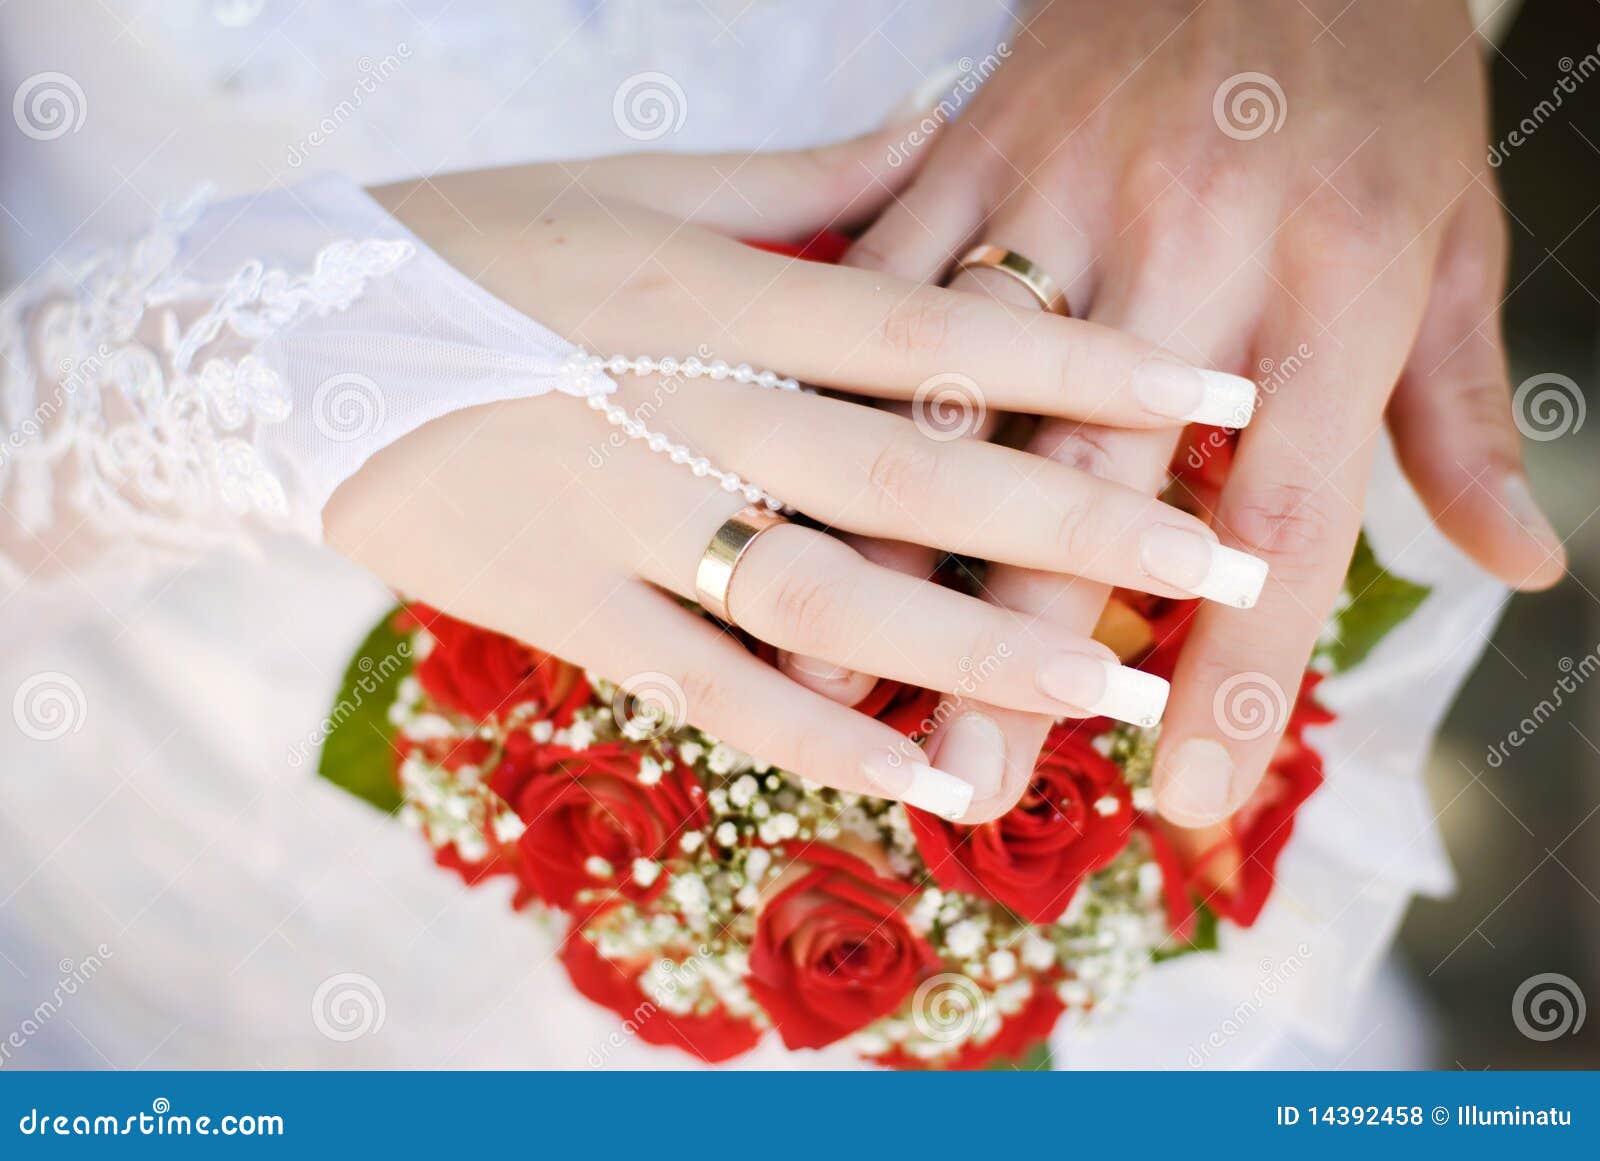 hands wedding rings